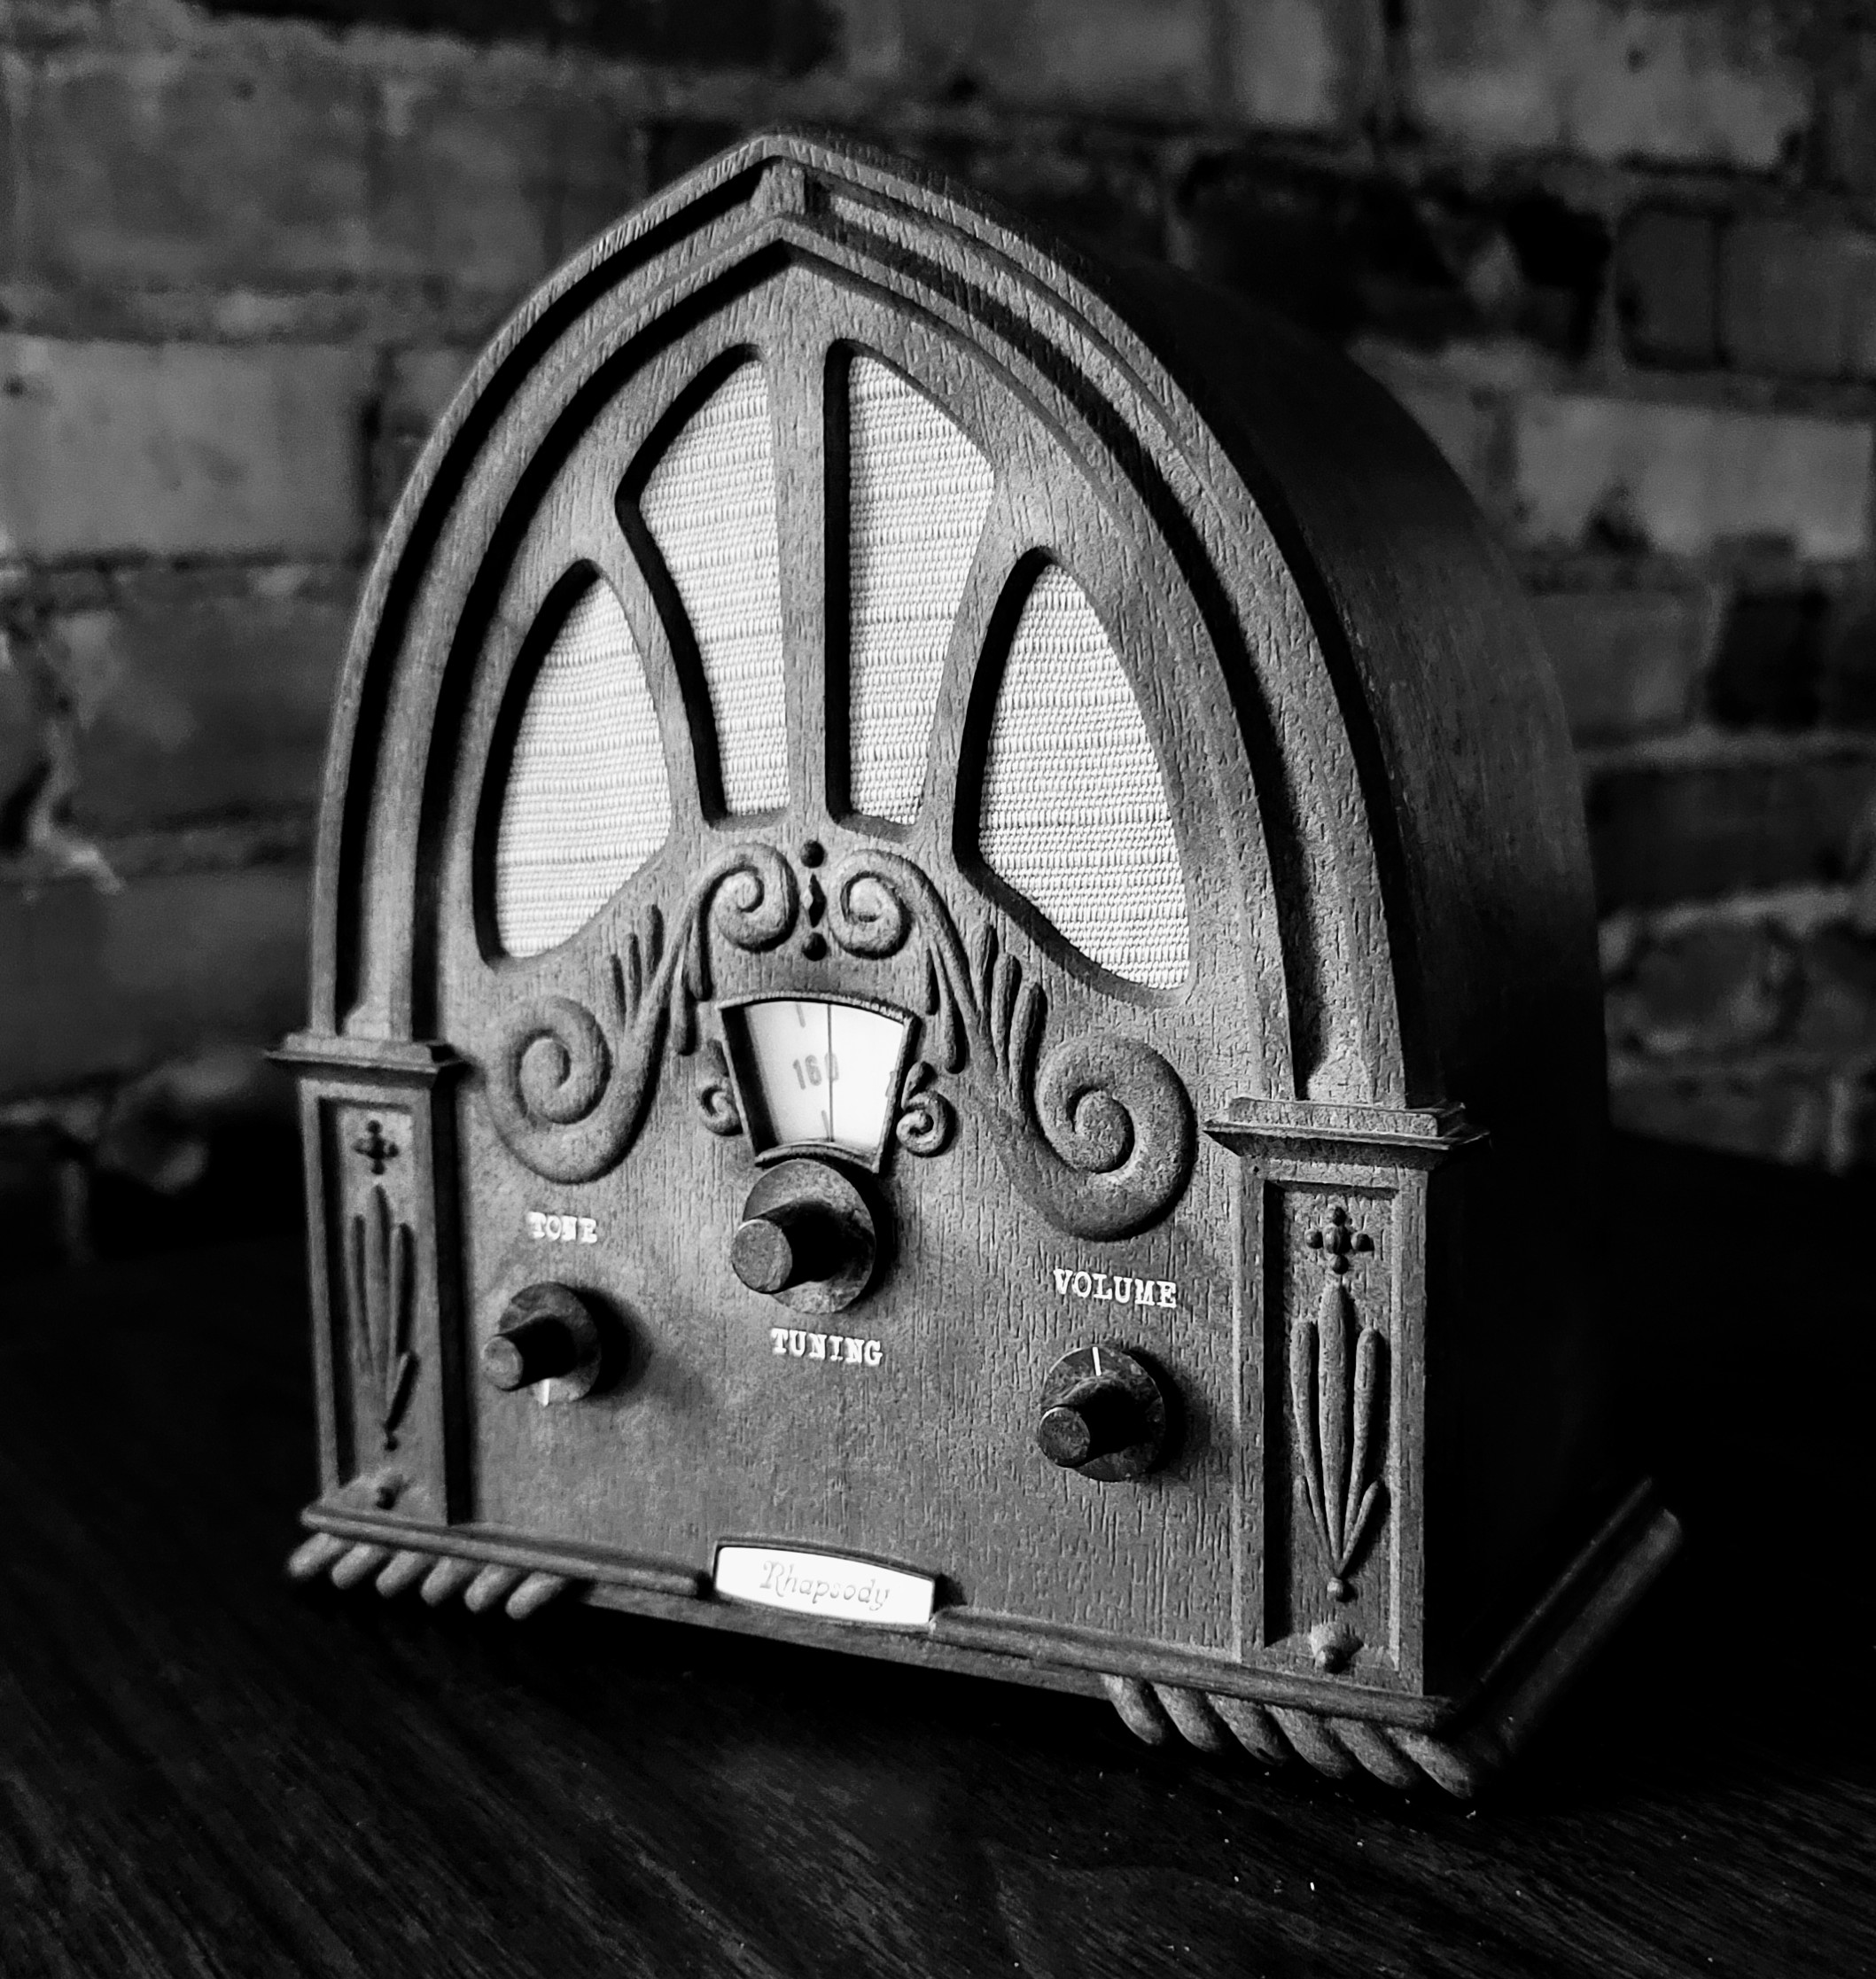 Morty's Radio Mausoleum